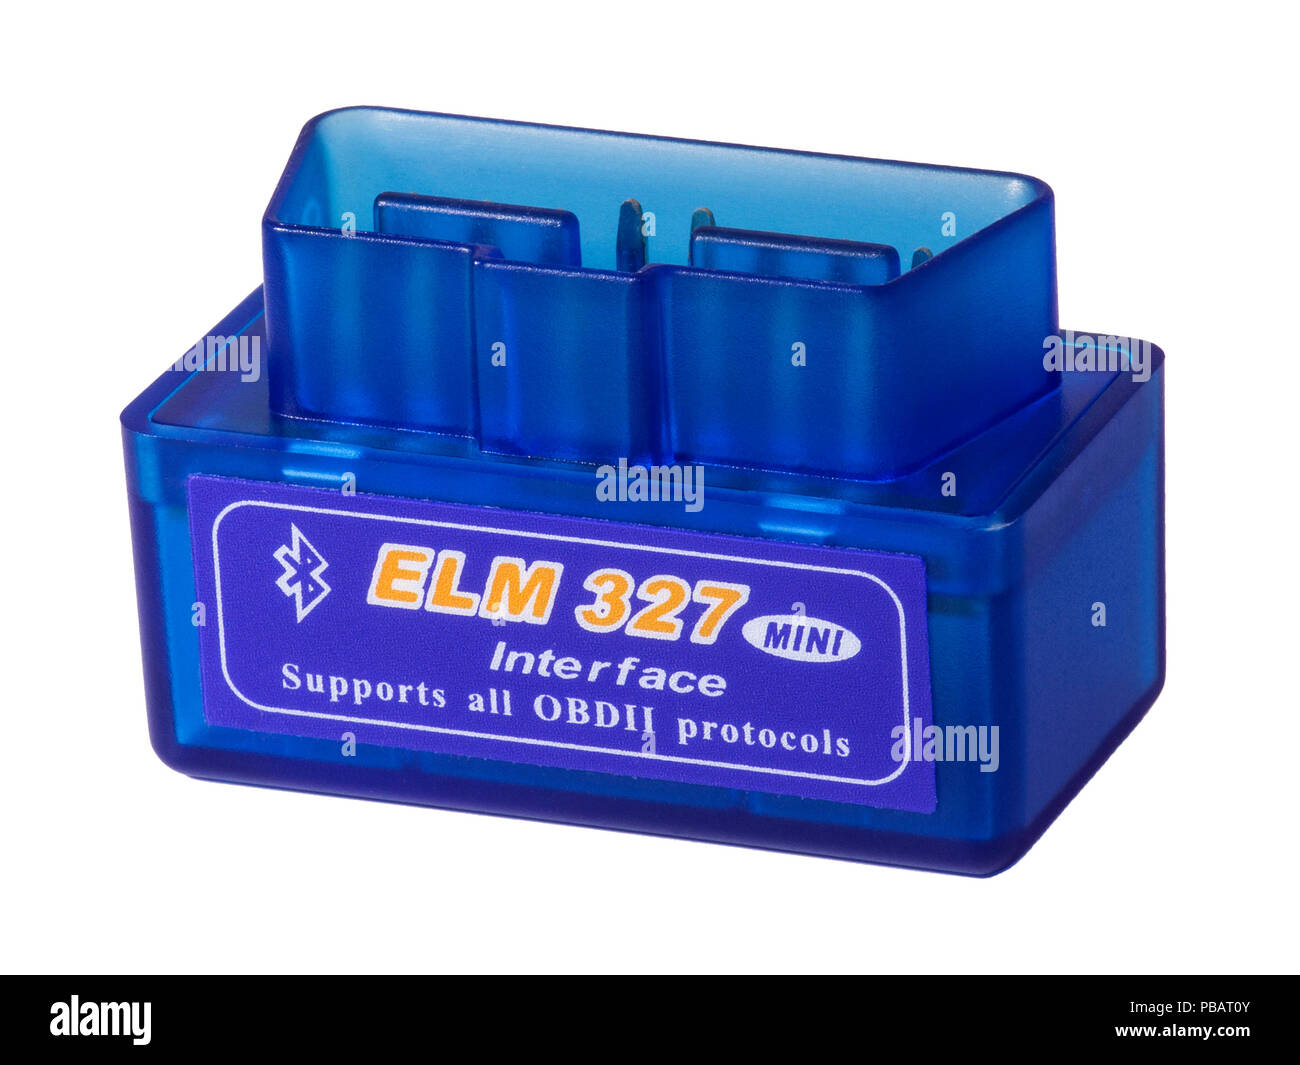 Elm 327 OBDii Bluetooth car reader. Stock Photo